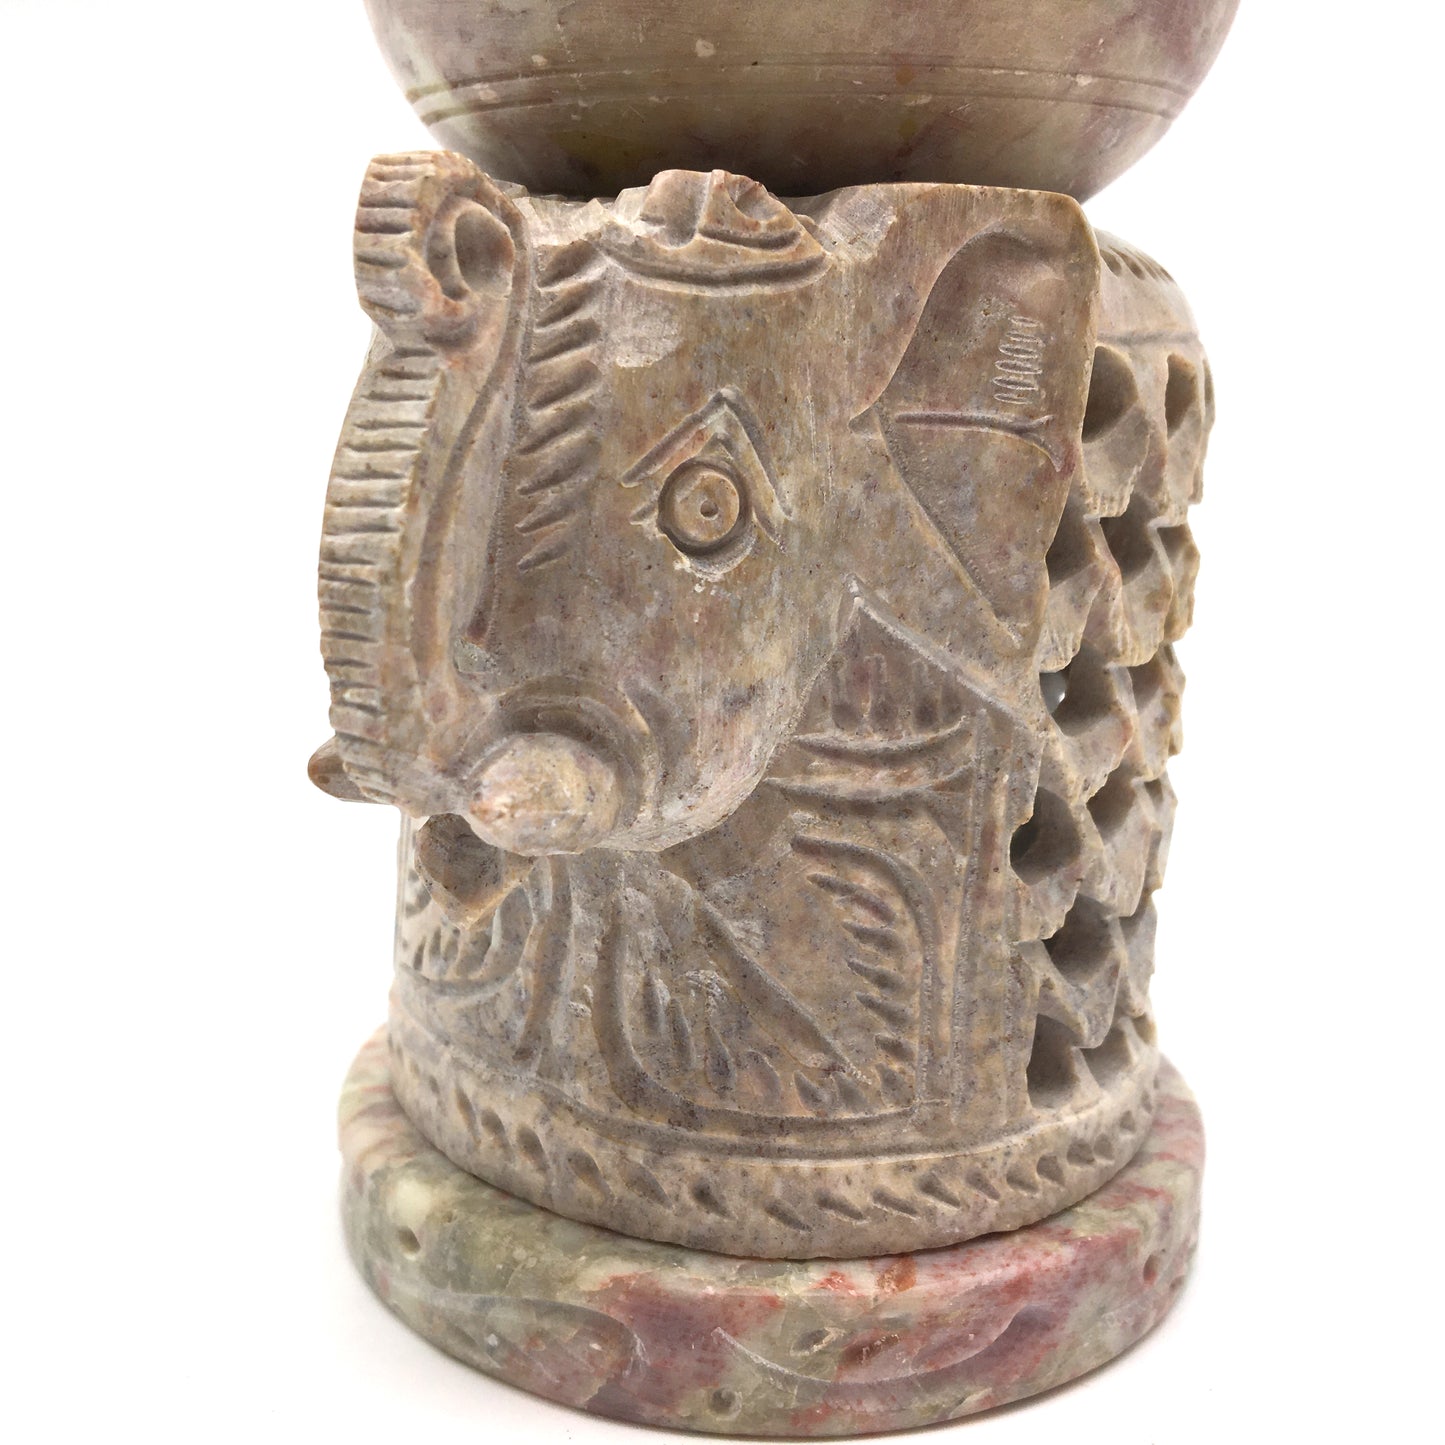 Decorative Elephant Oil Burner Diffuser Hand-Carved Natural India Soapstone 4.25